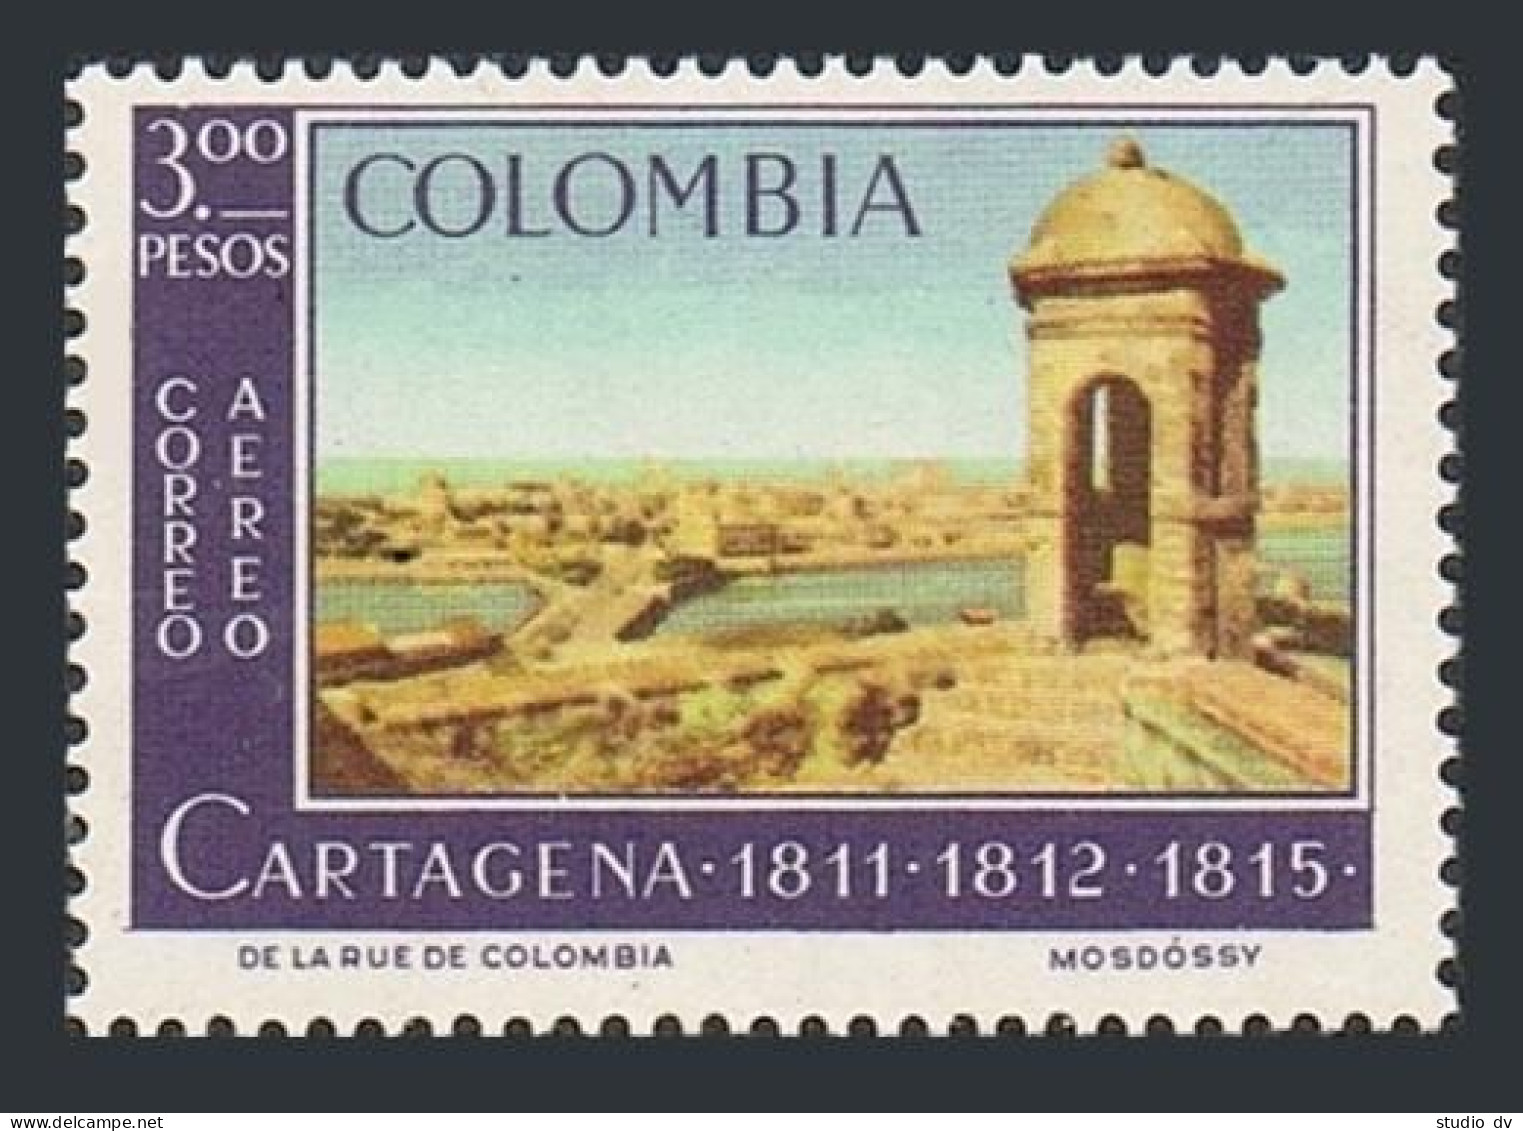 Colombia C461,MNH.Michel 1054. Cartagena's Independence In 1811.1964. - Kolumbien